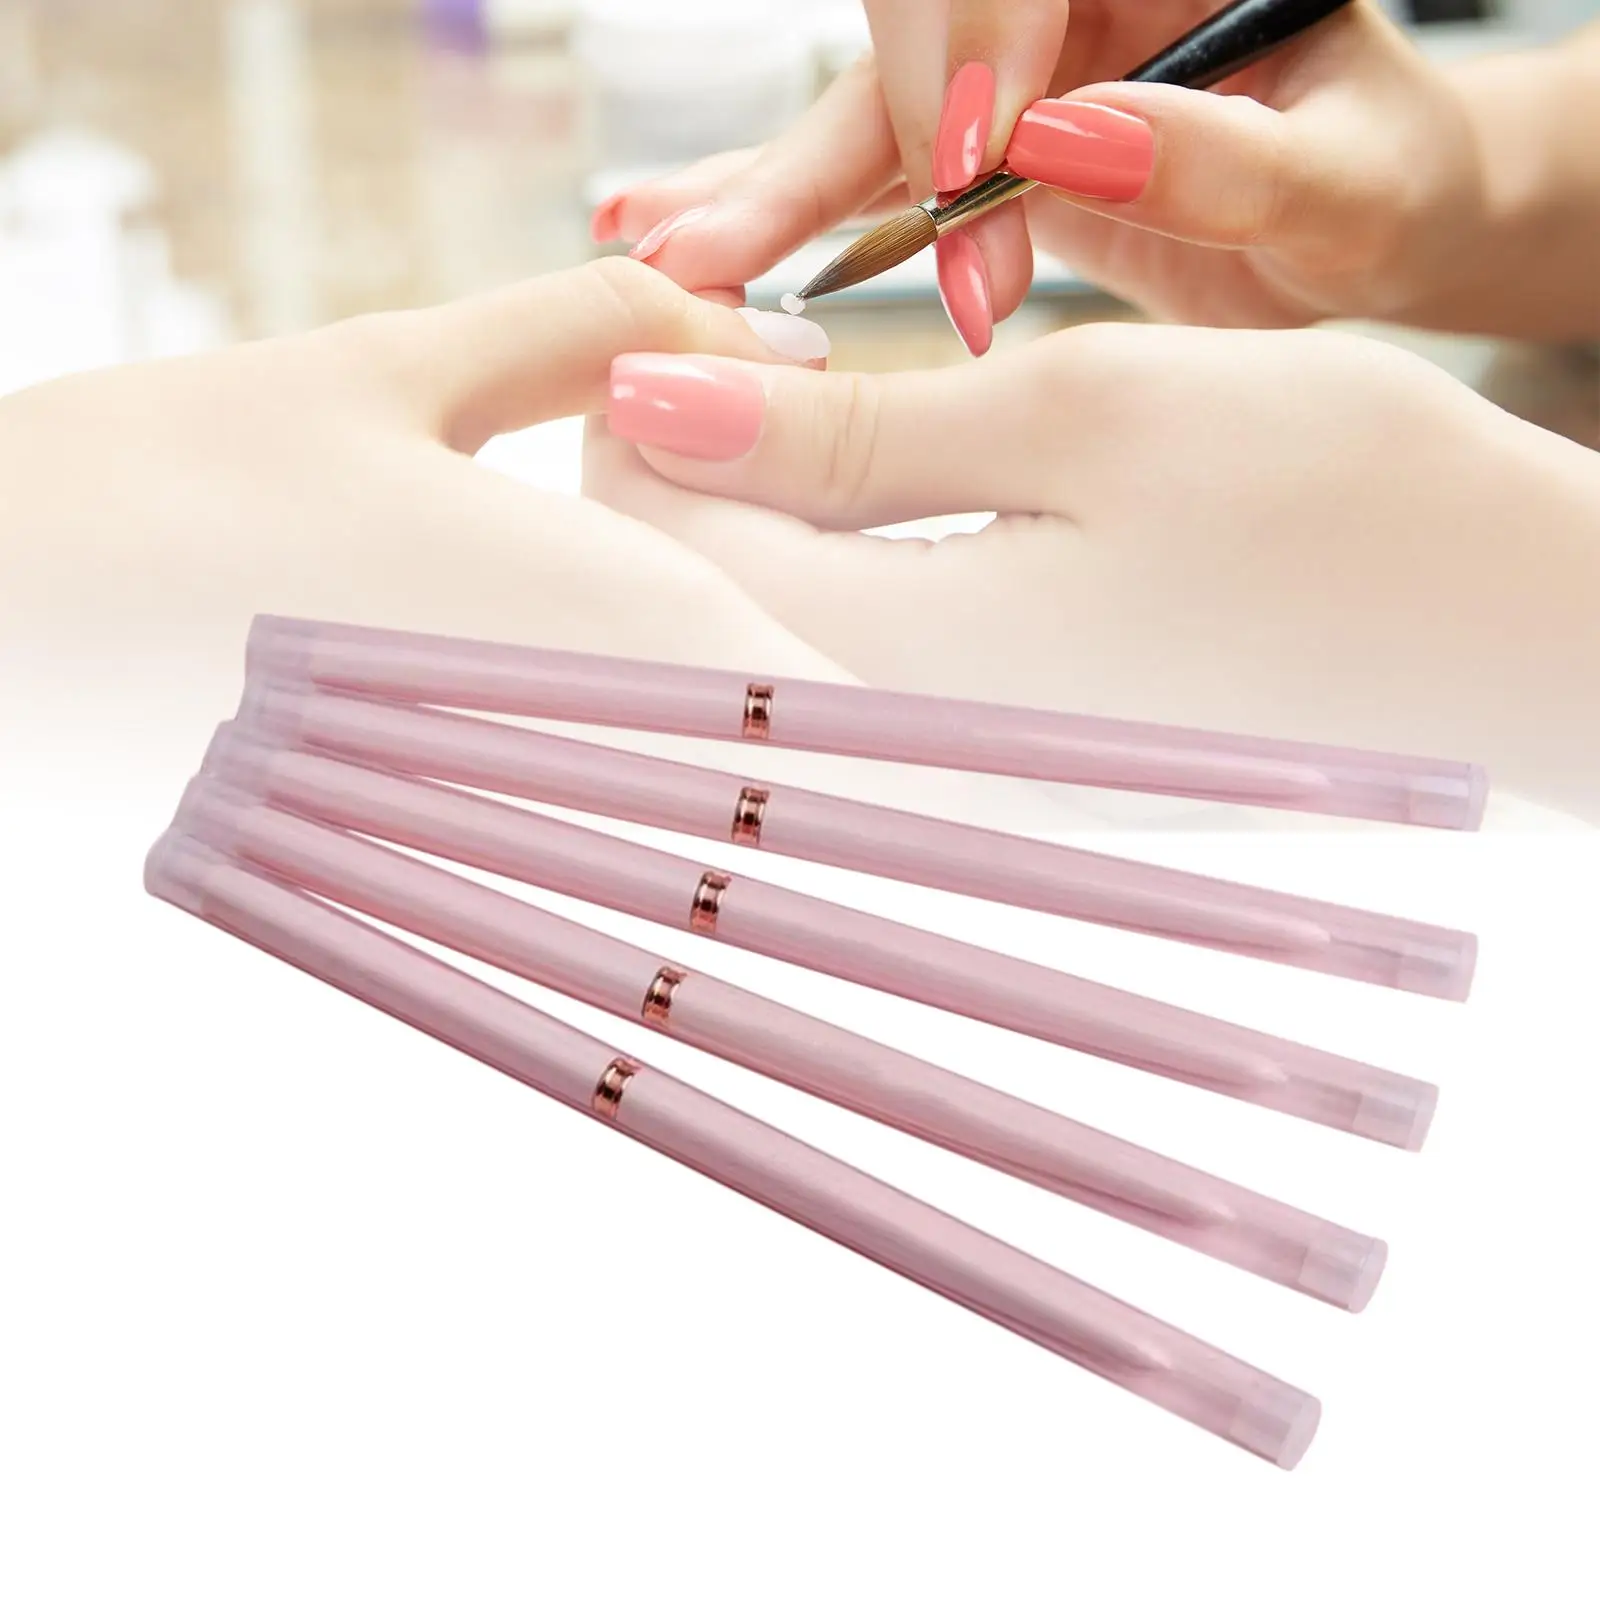 5 Pieces Nail Art Brushes 4 mm-25mm Striping Liner Brush Nail Art Pens for Long Lines DIY Professional Design Nail Art Design